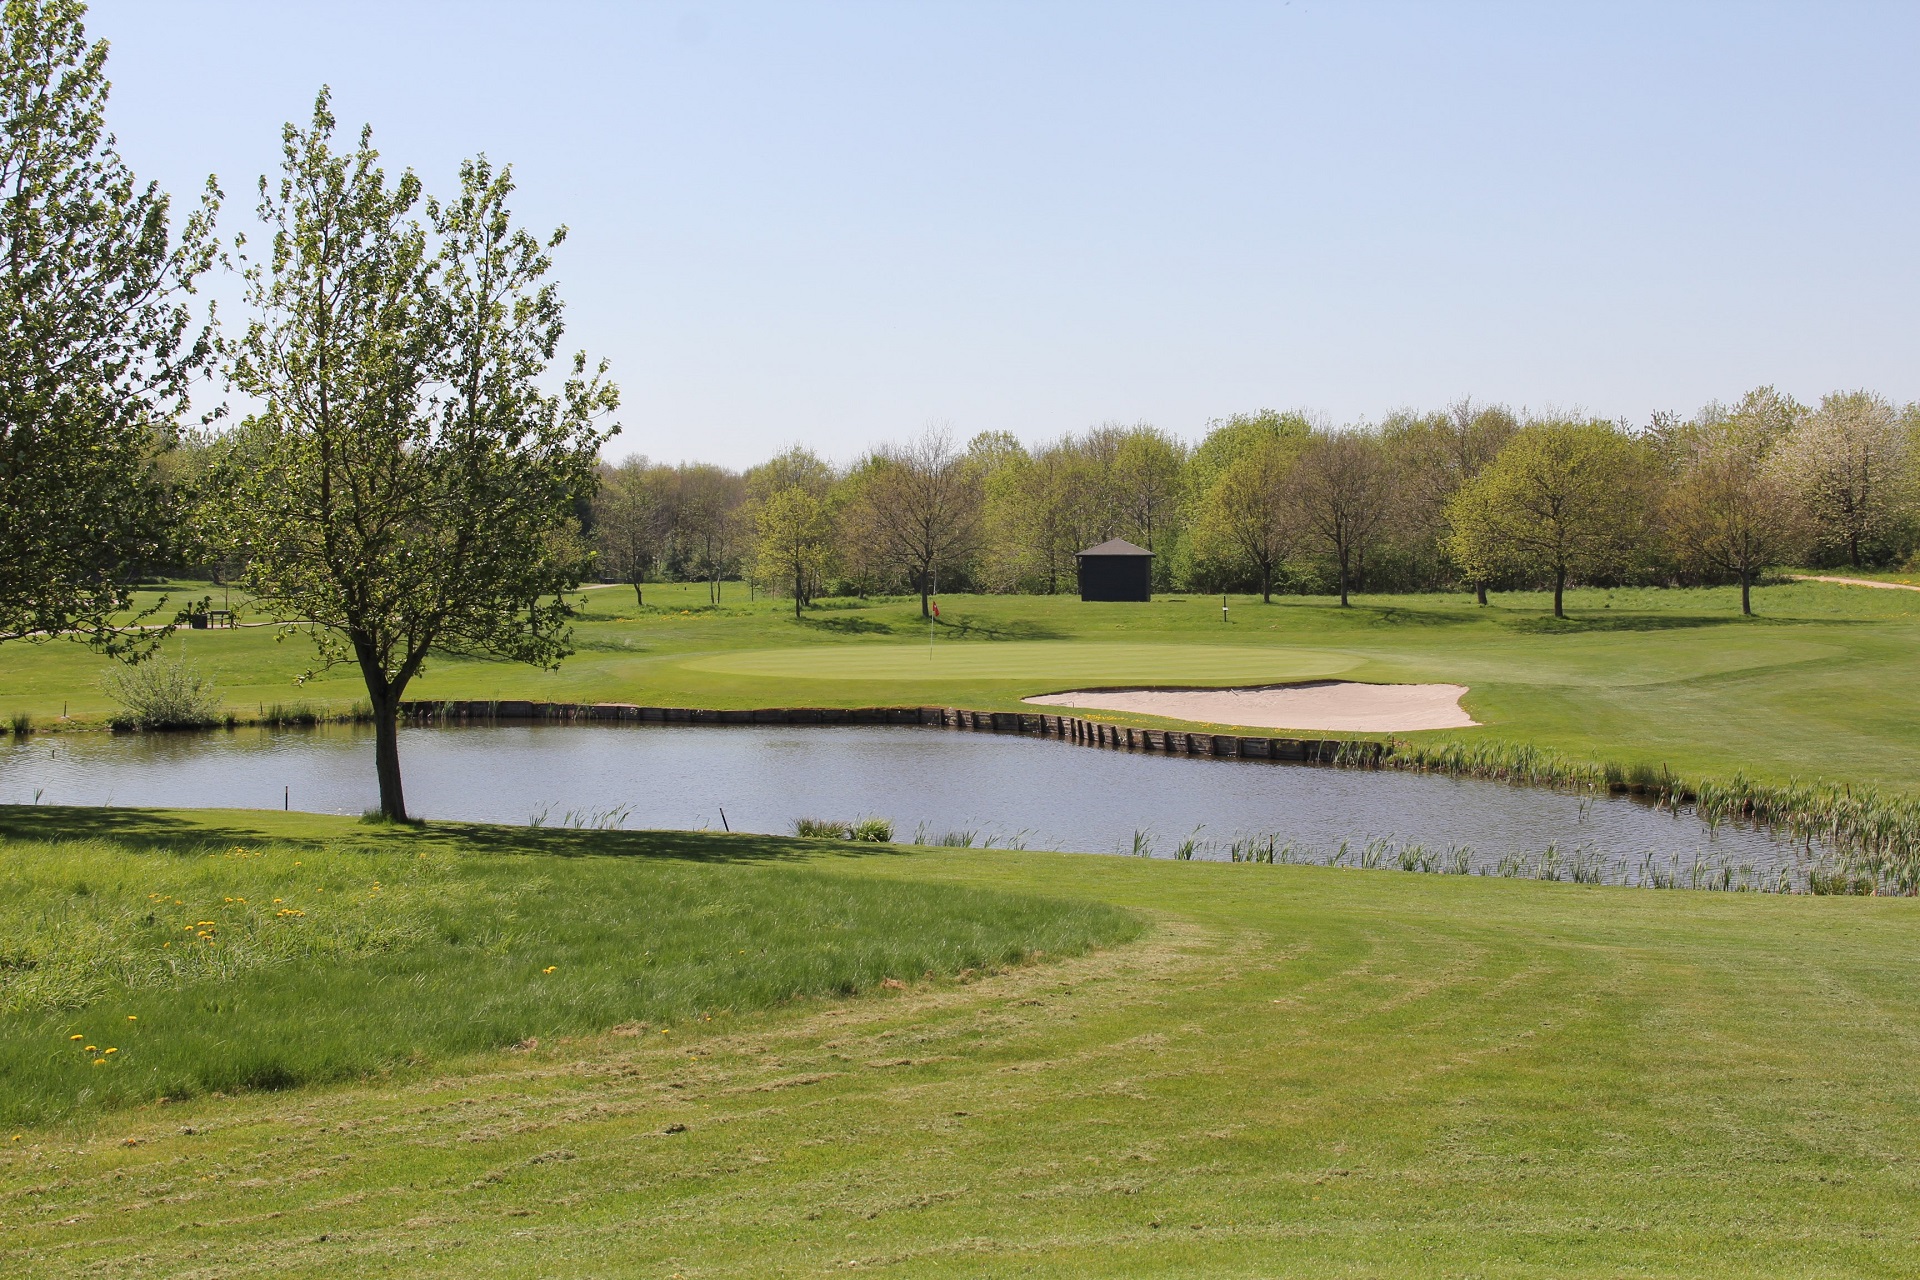 Odense Eventyr Golf | Golf på Fyn